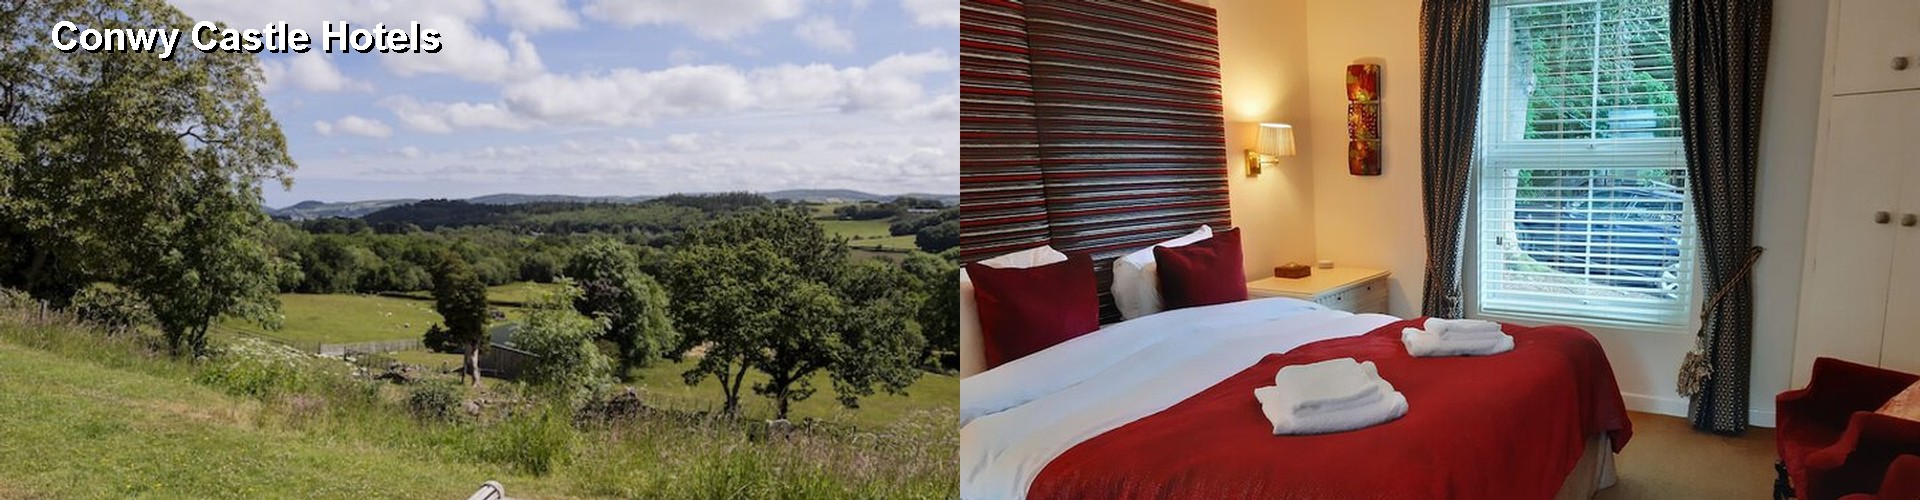 5 Best Hotels near Conwy Castle